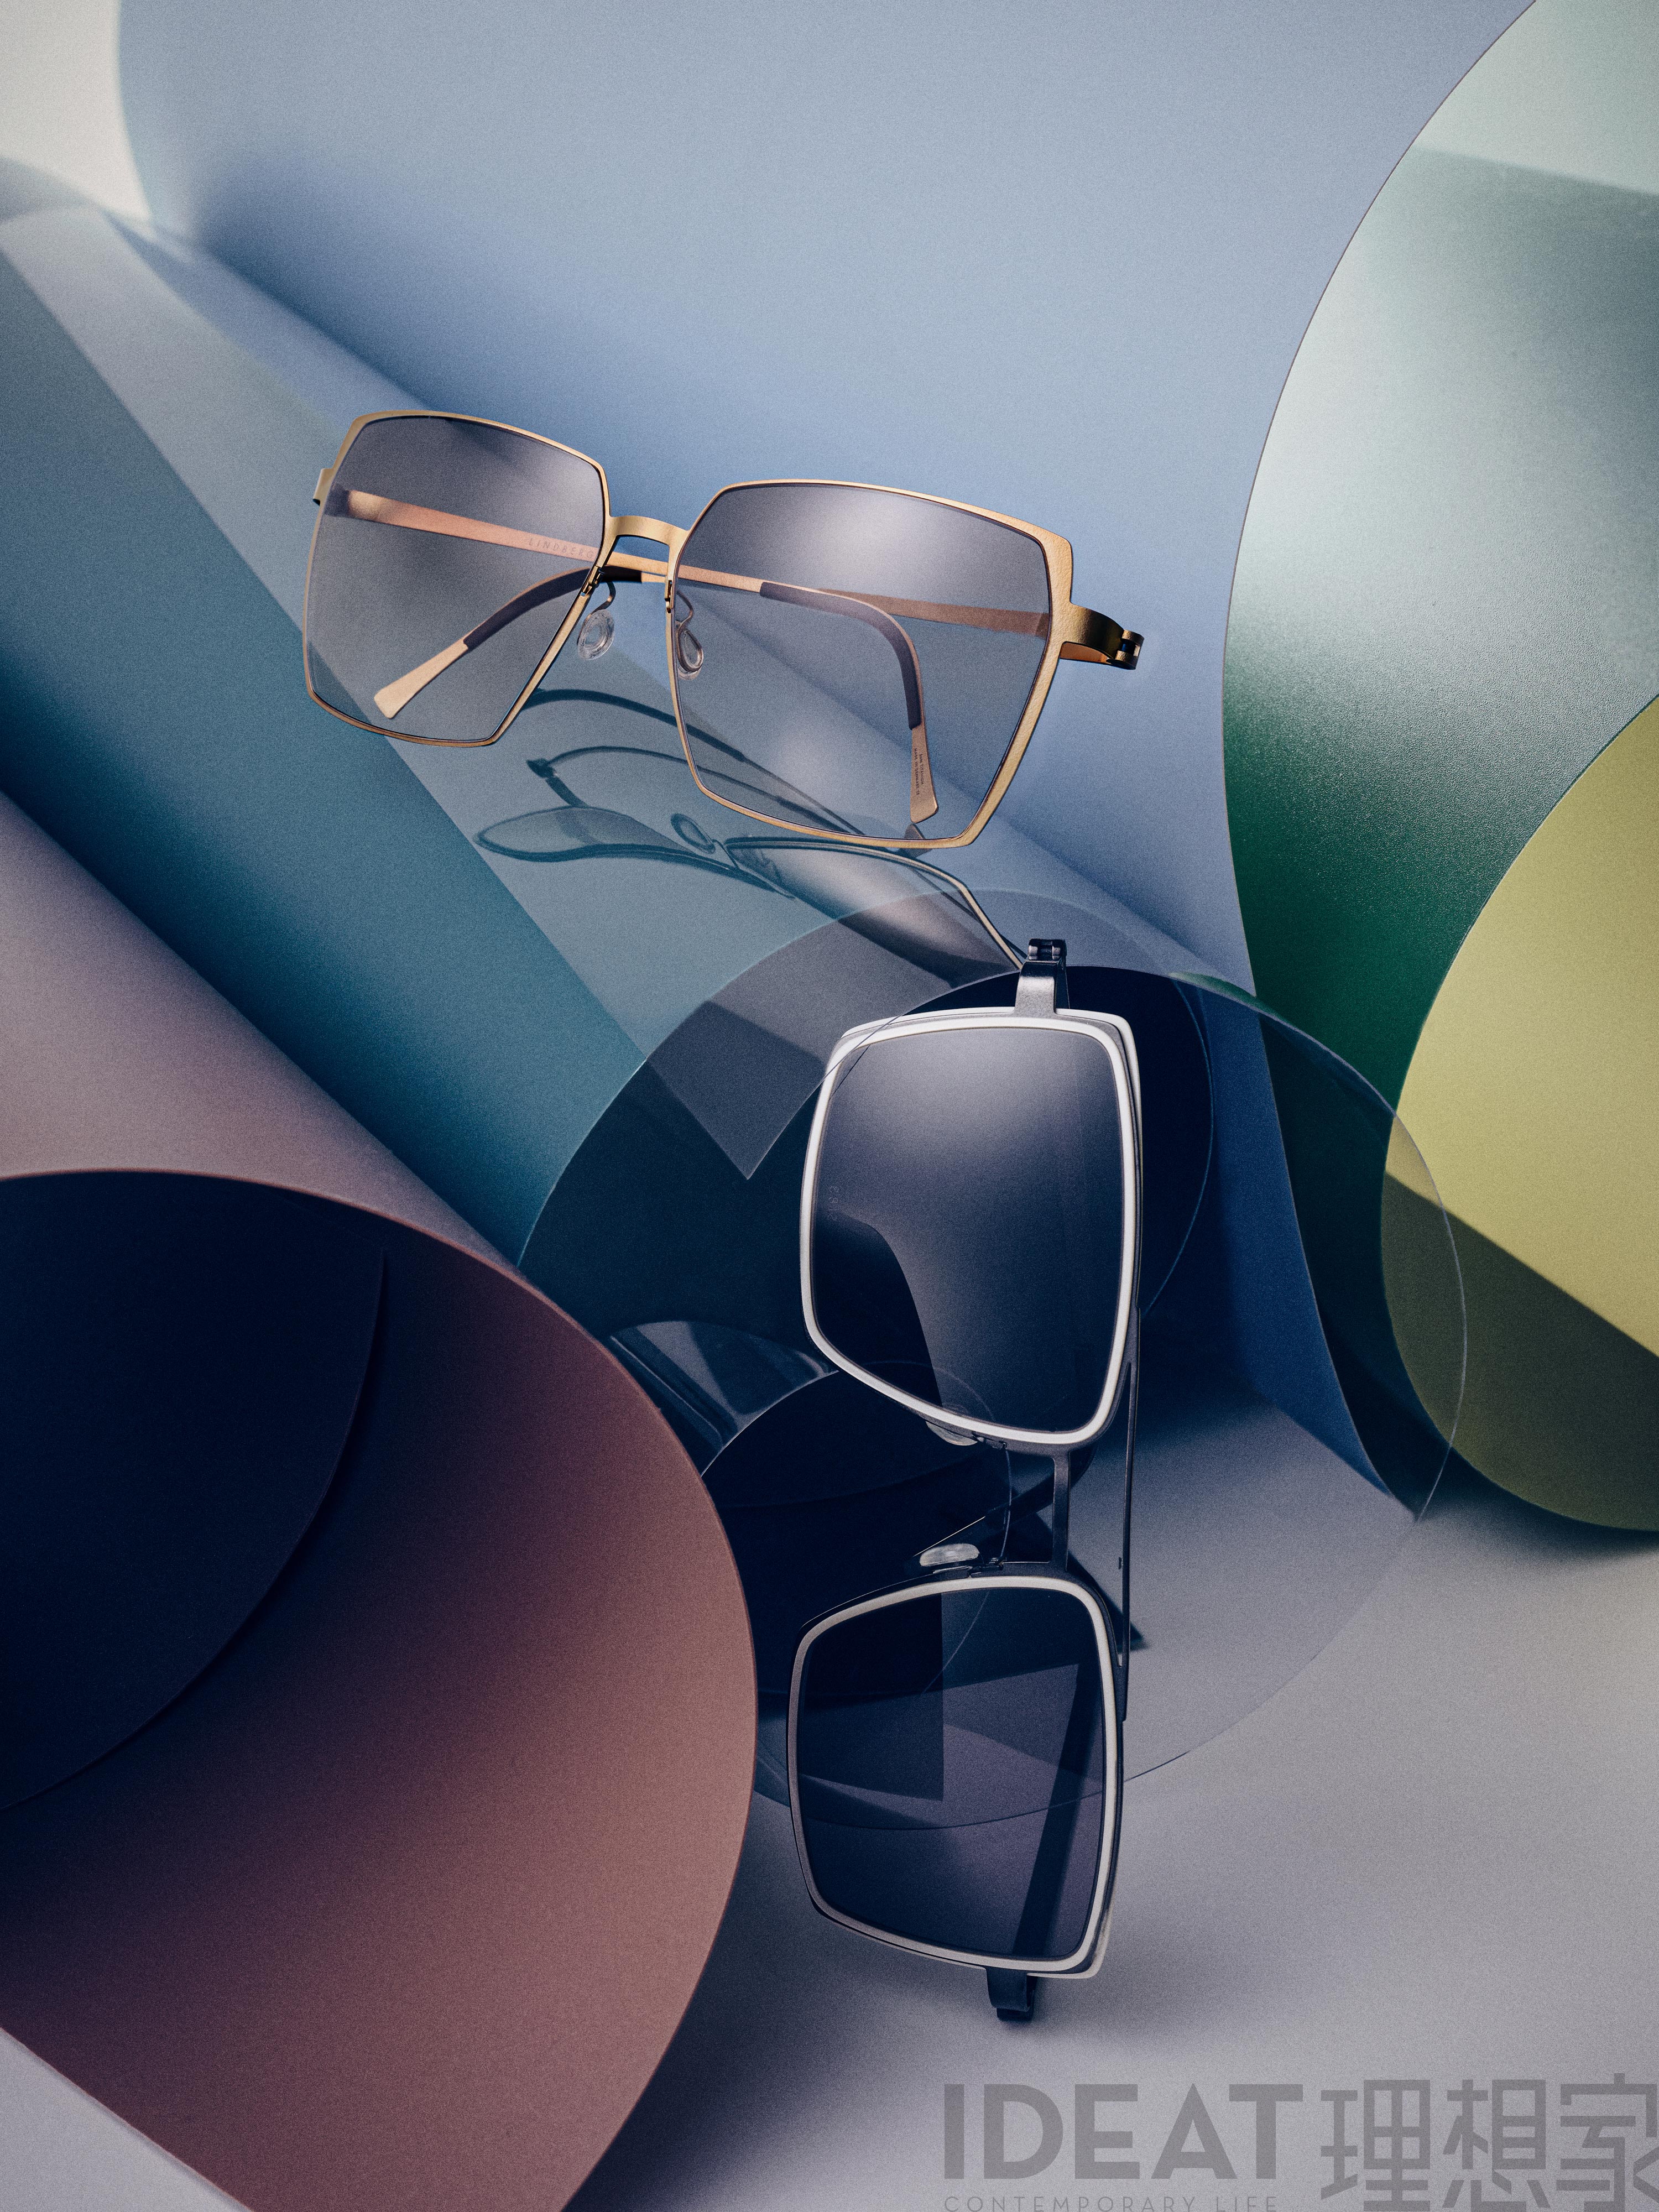 IDEAT magazine featuring LINDBERG square shape titanium sunglasses in Model 8907 and 8410